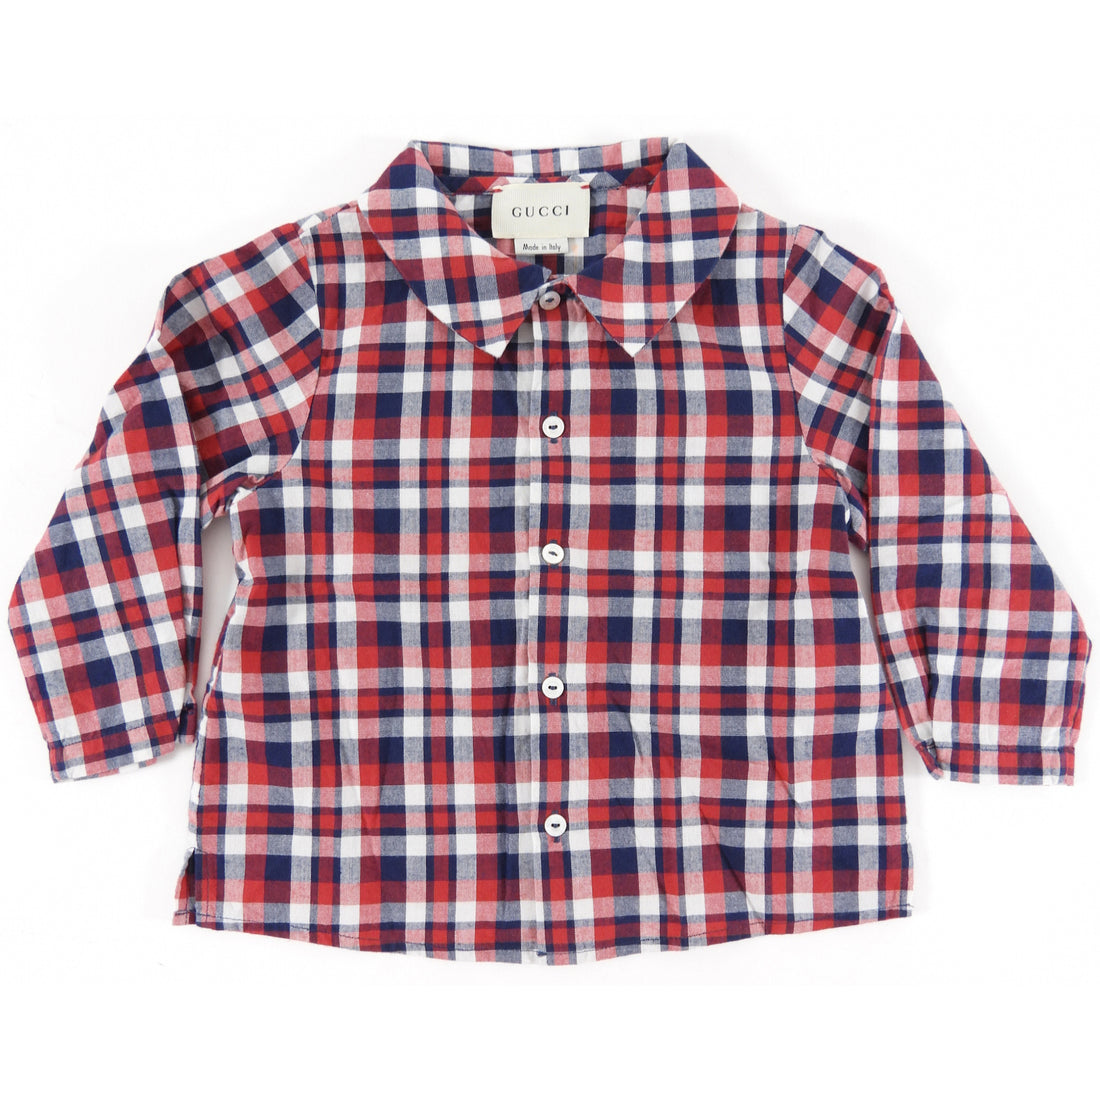 Gucci Baby  Navy Red White Check Shirt - 9/12 M